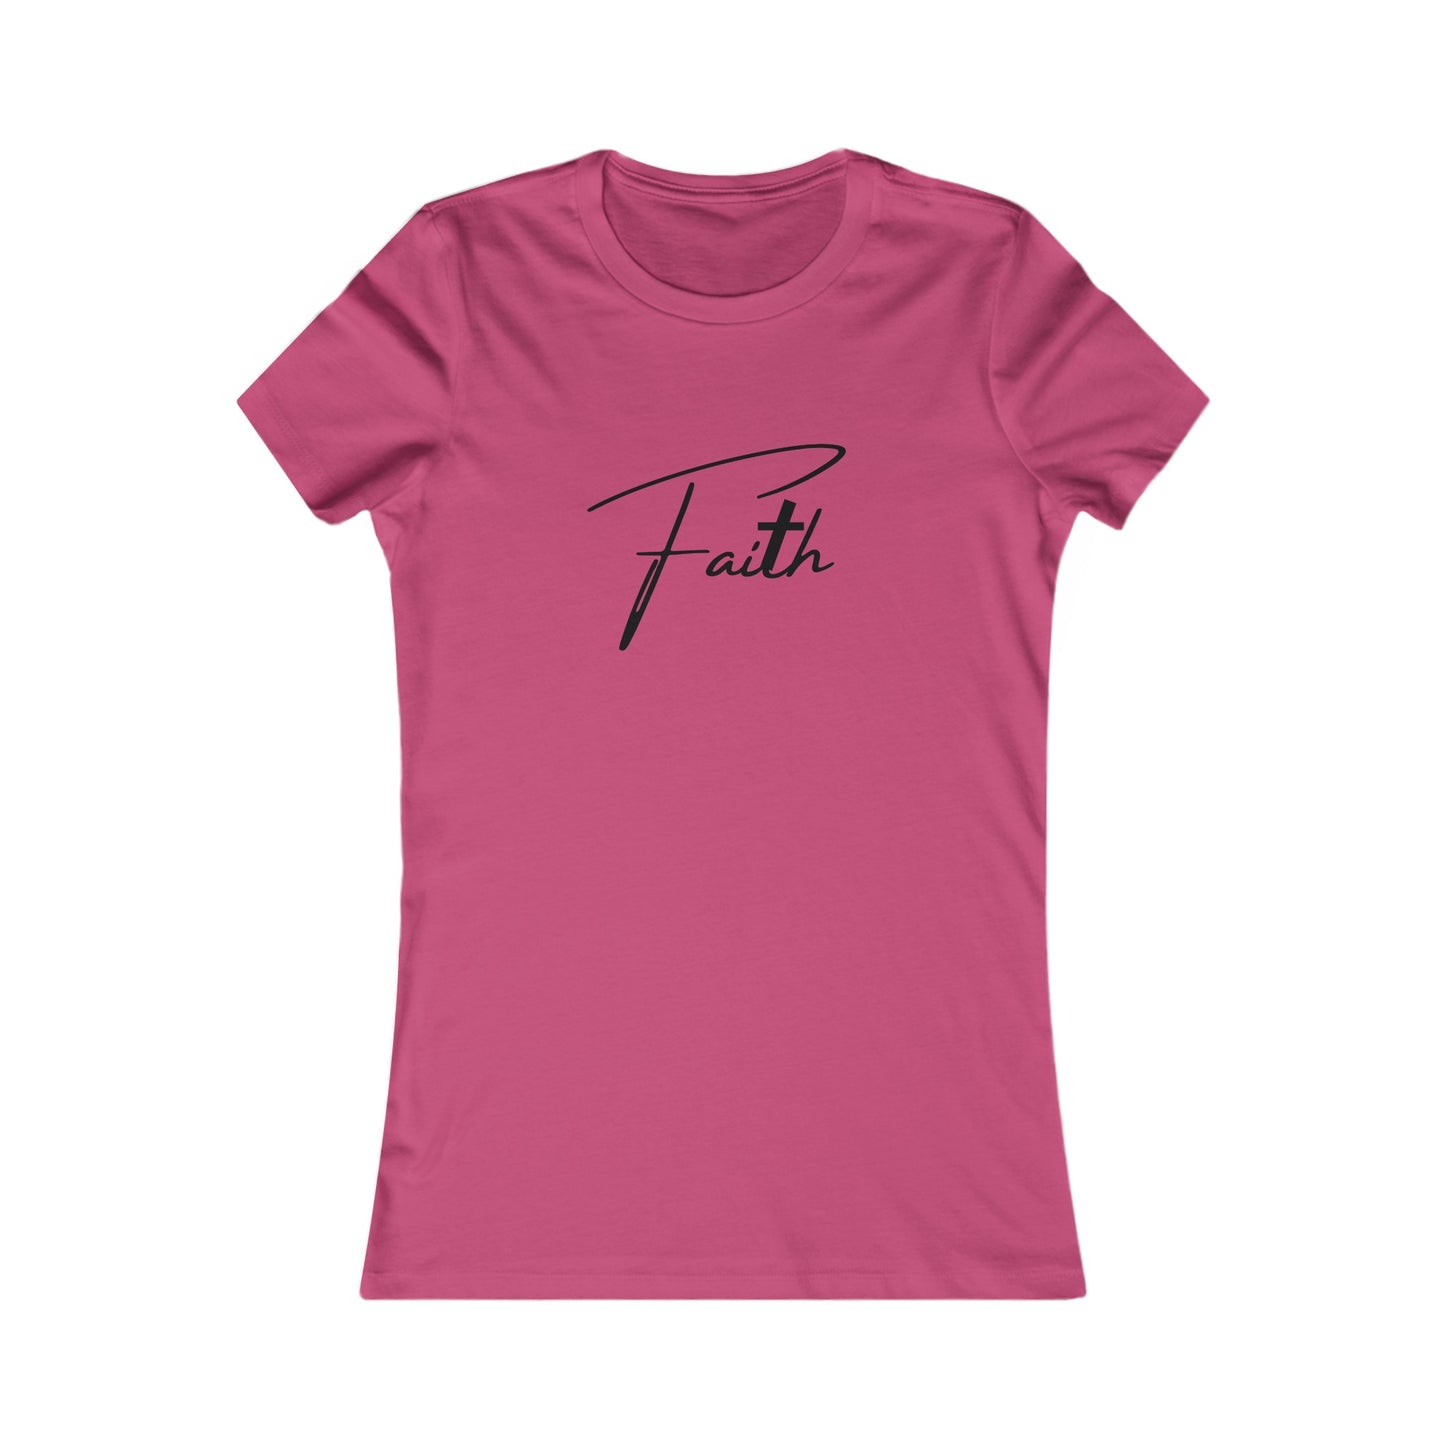 Cross-ed T Faith Women's Fitted Tshirt (Black Logo)